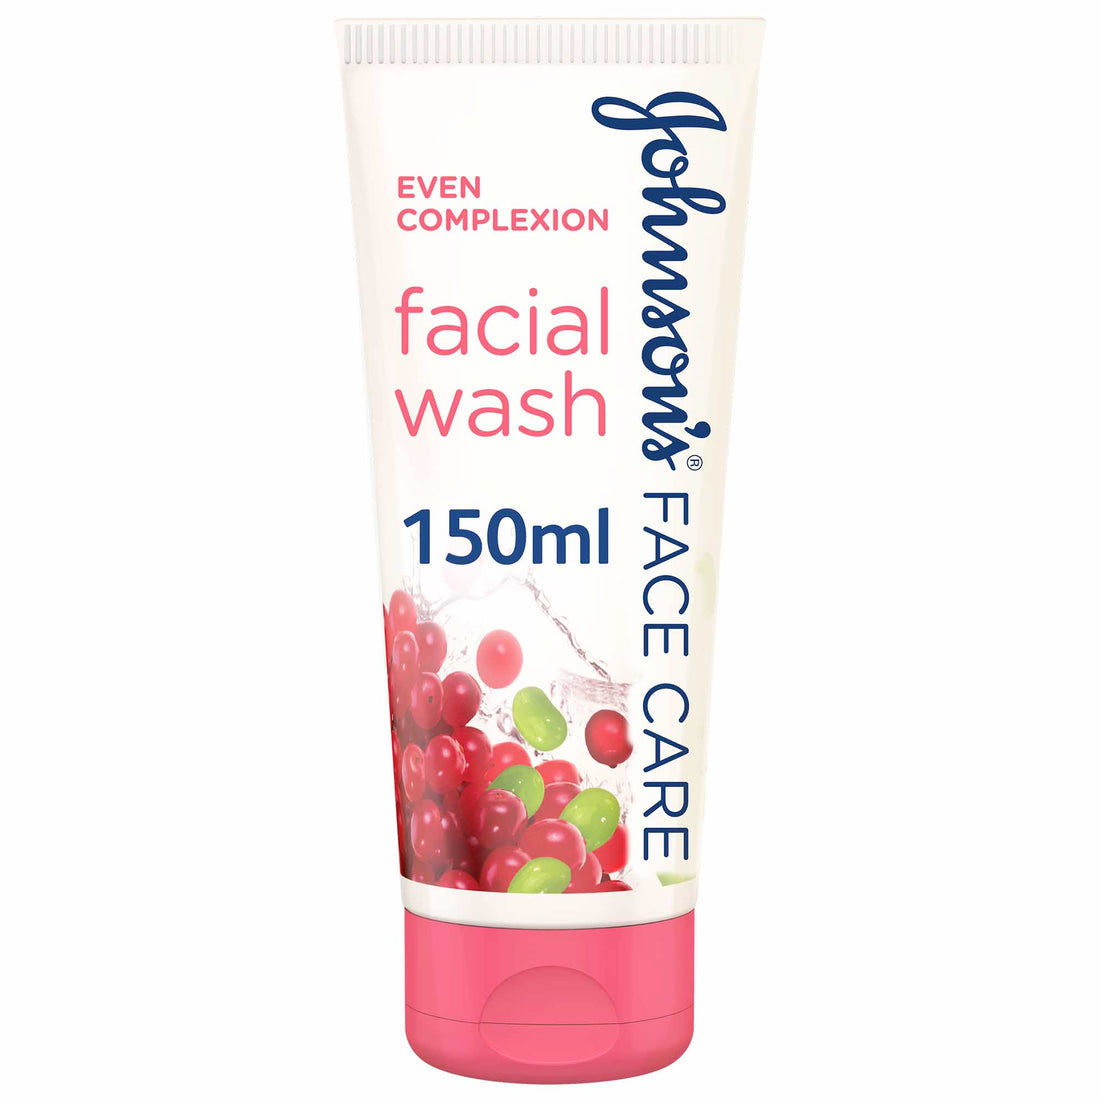 JOHNSON’S Face Wash, Even Complexion, 150ml